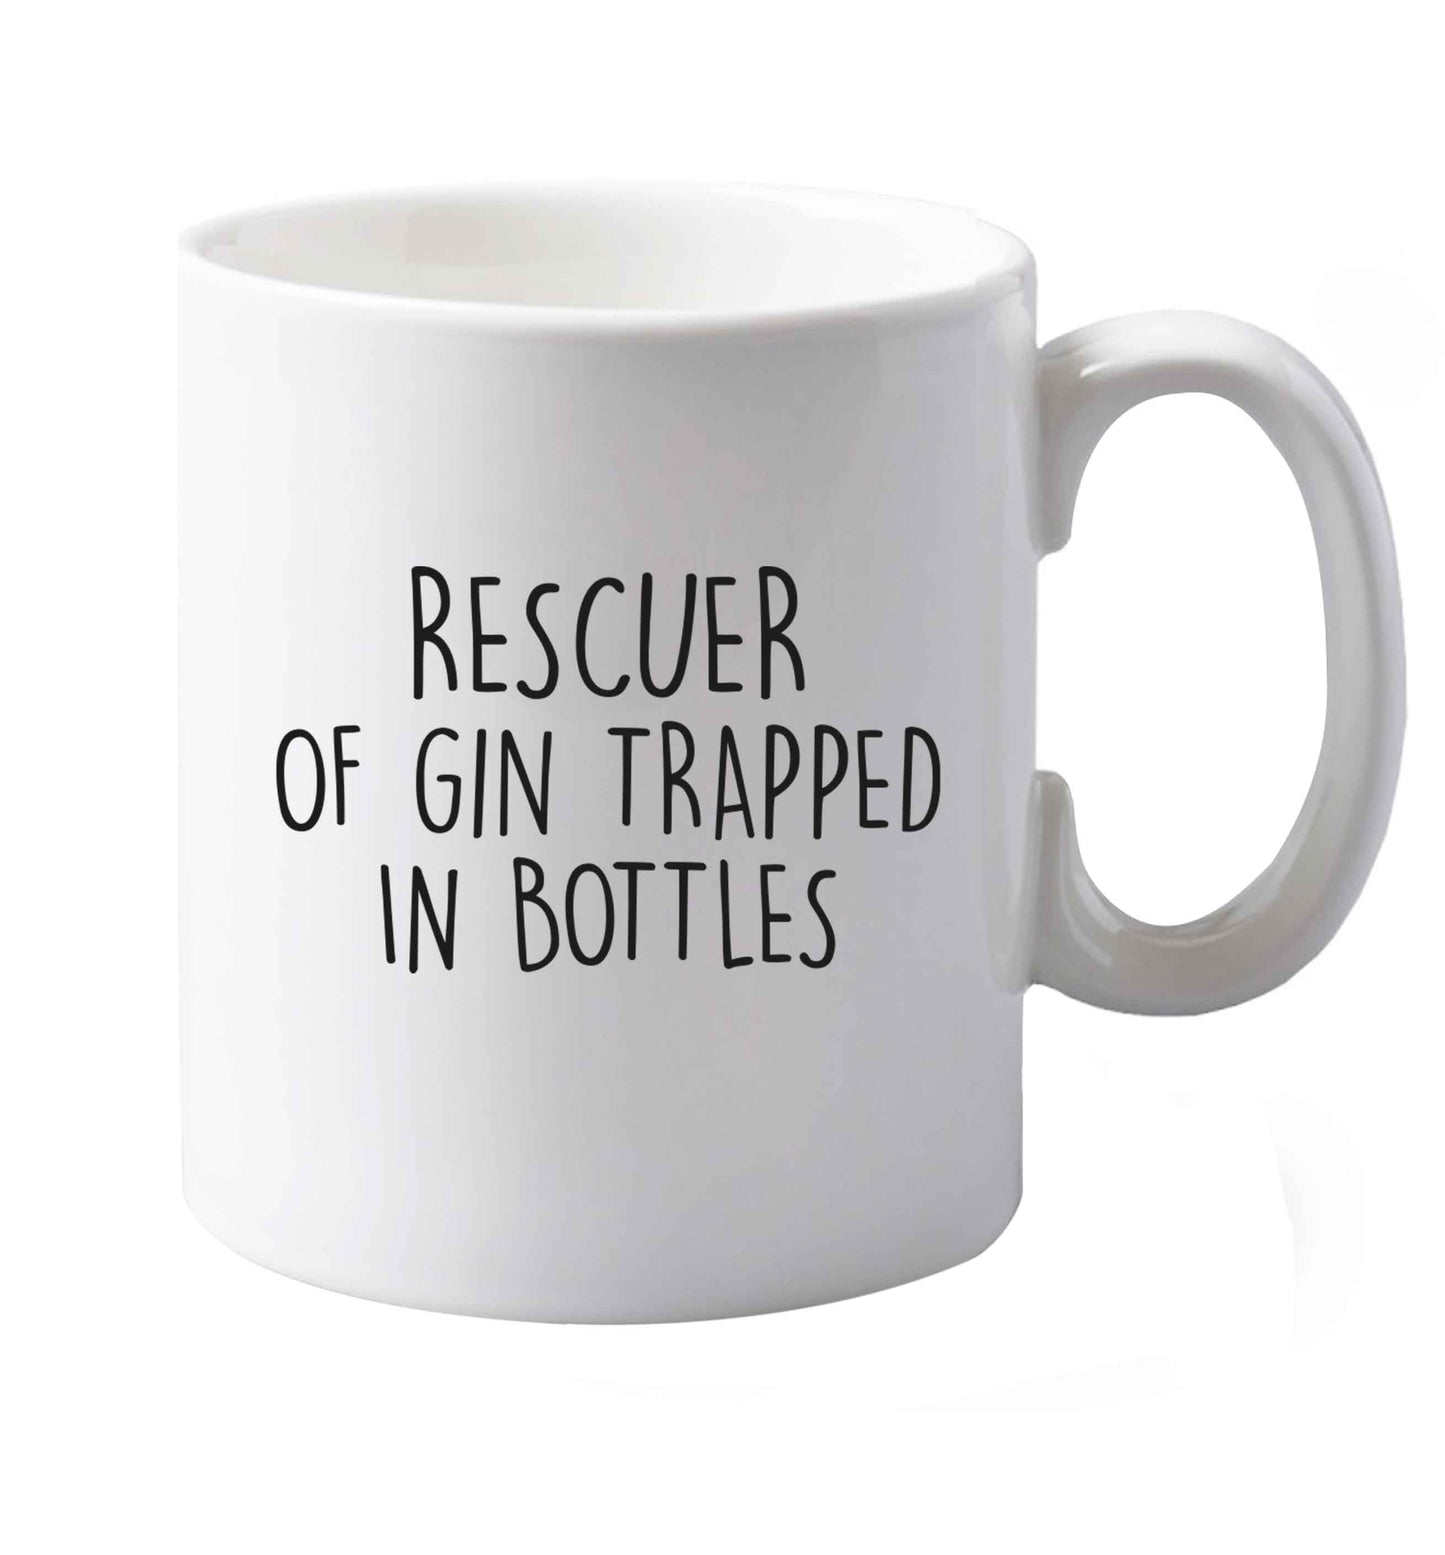 10 oz Rescuer of Gin Trapped in Bottles ceramic mug both sides